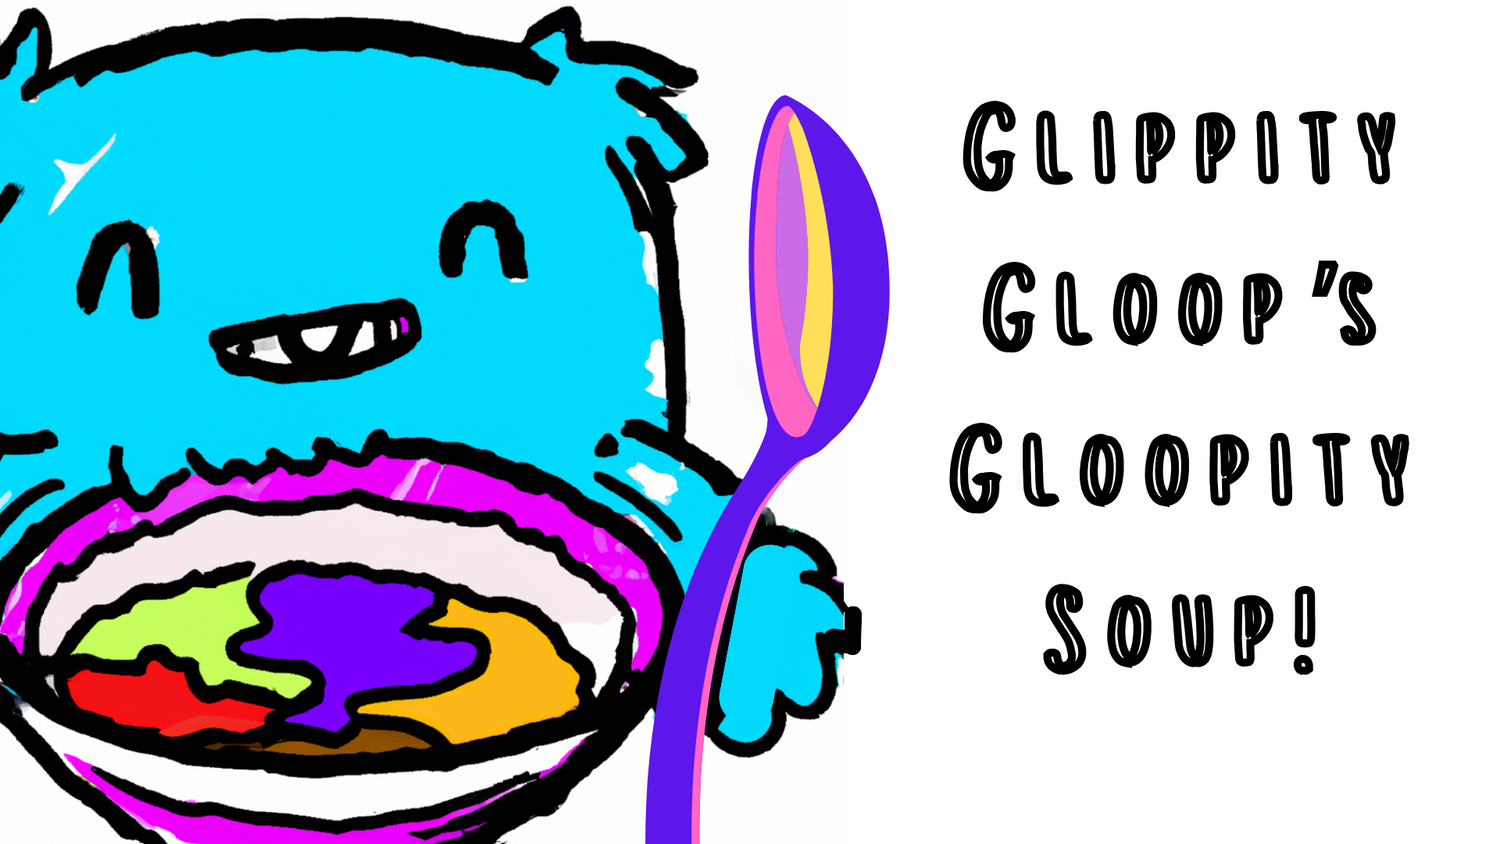 Glippity Gloop's Gloopity Soup - A Short Story